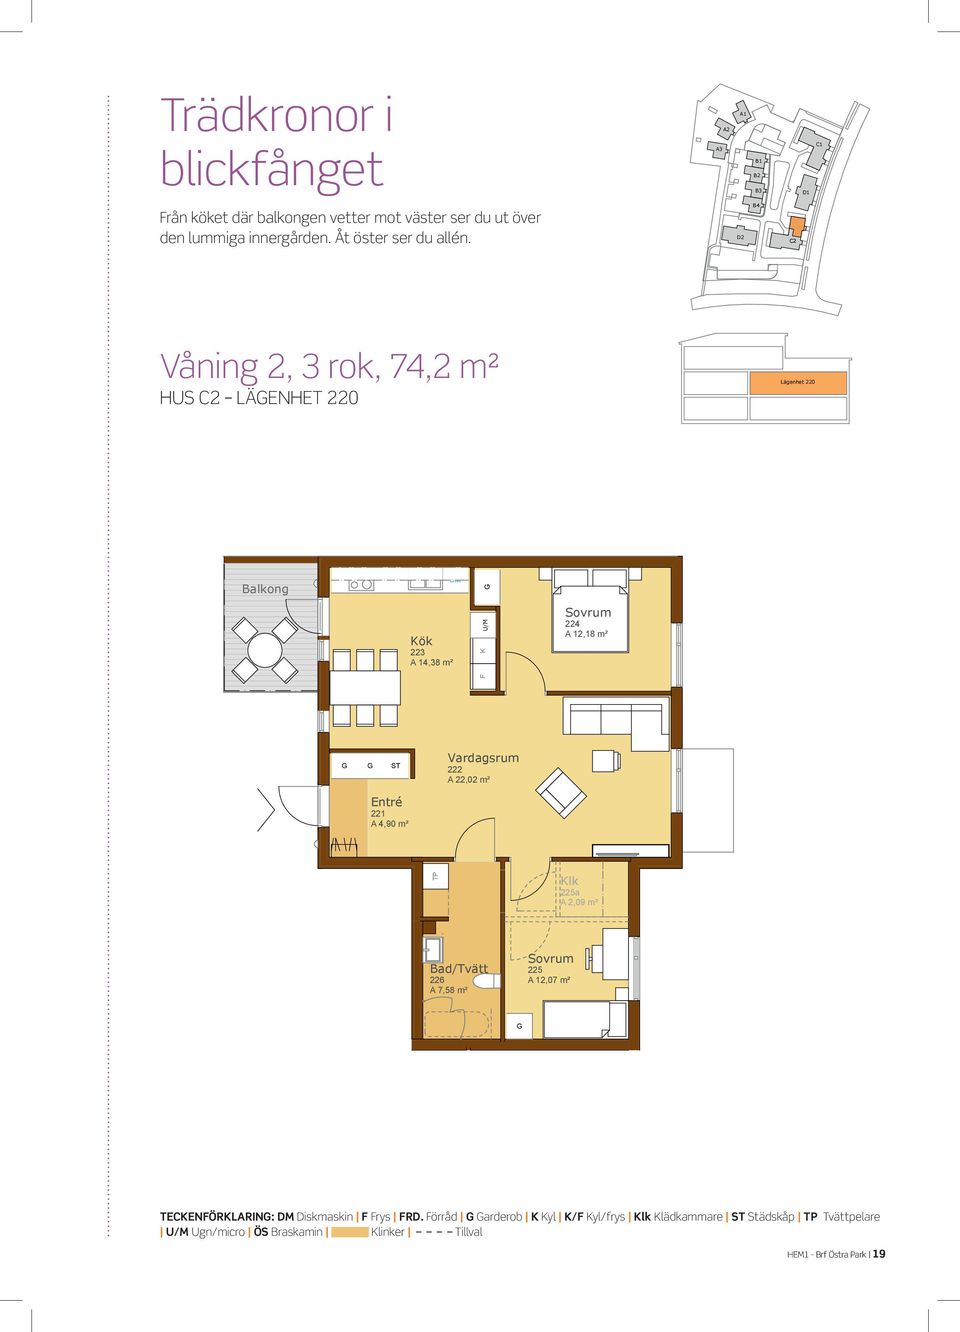 A,8 m² A,0 m² A,0 m² A,8 m² A,8 m² a a A,0 m² A,0 m² Lägenhet 0 Lägenhet 0 RO A, m² A,0 m² A,8 m² Trädkronor i blickfånget.